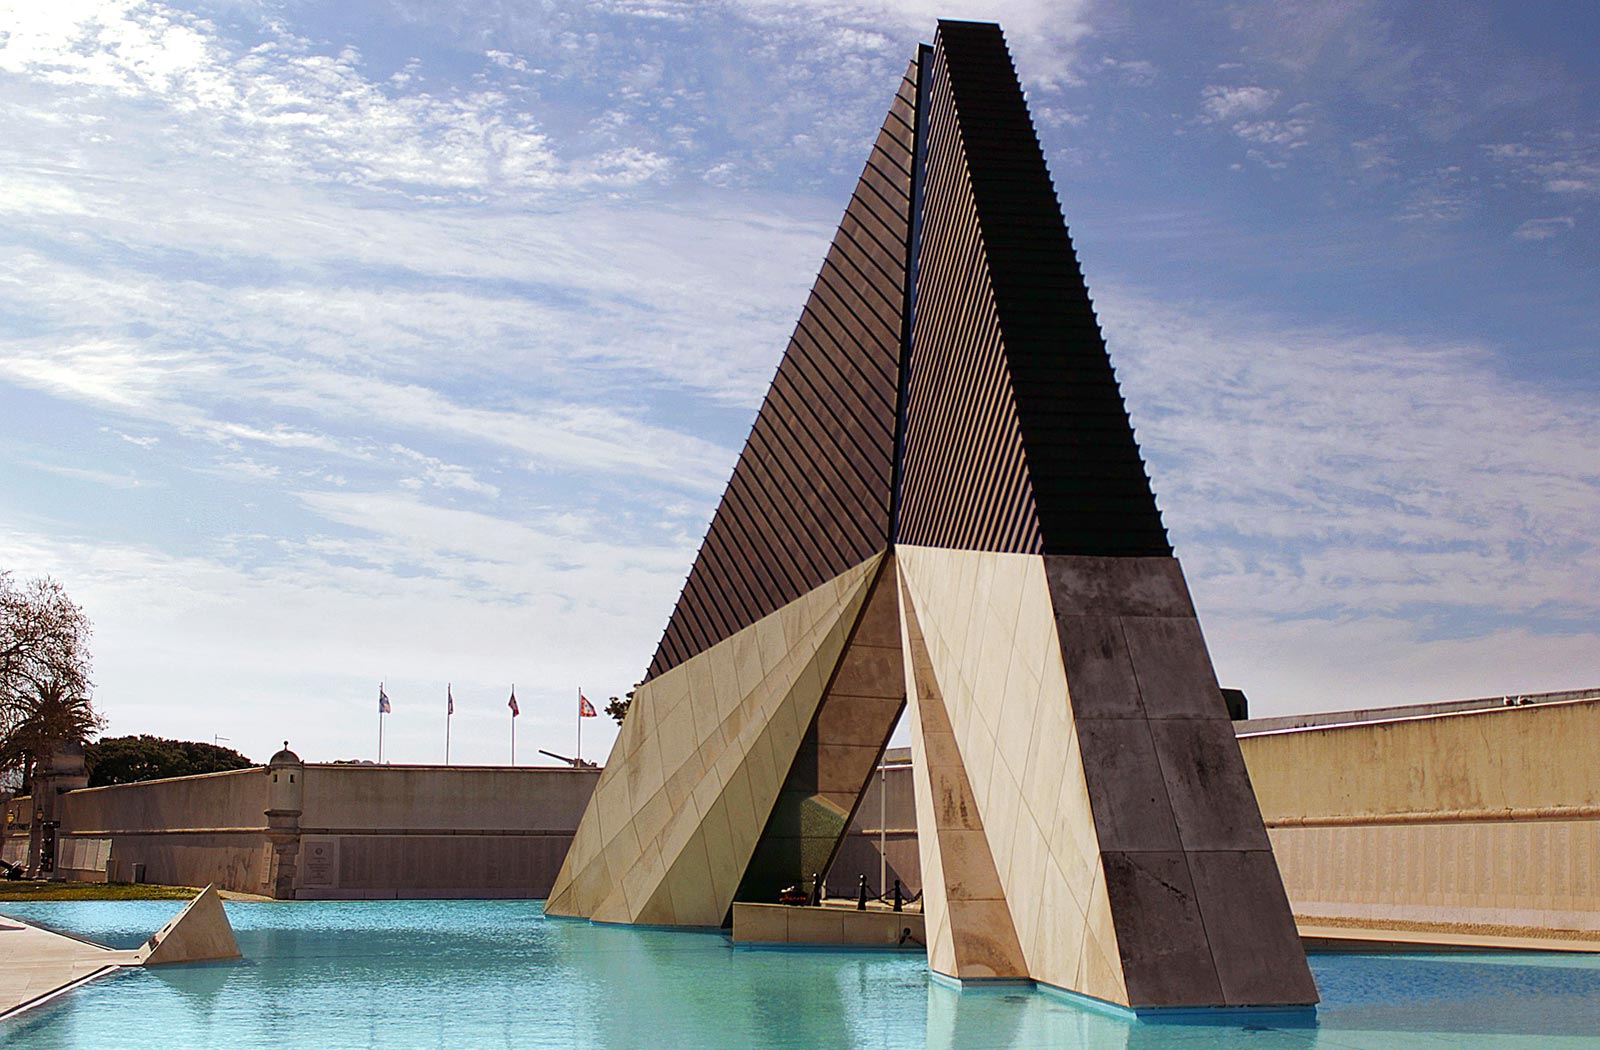 Monumento aos Combatentes do Ultramar - Belem | Monuments | Portugal